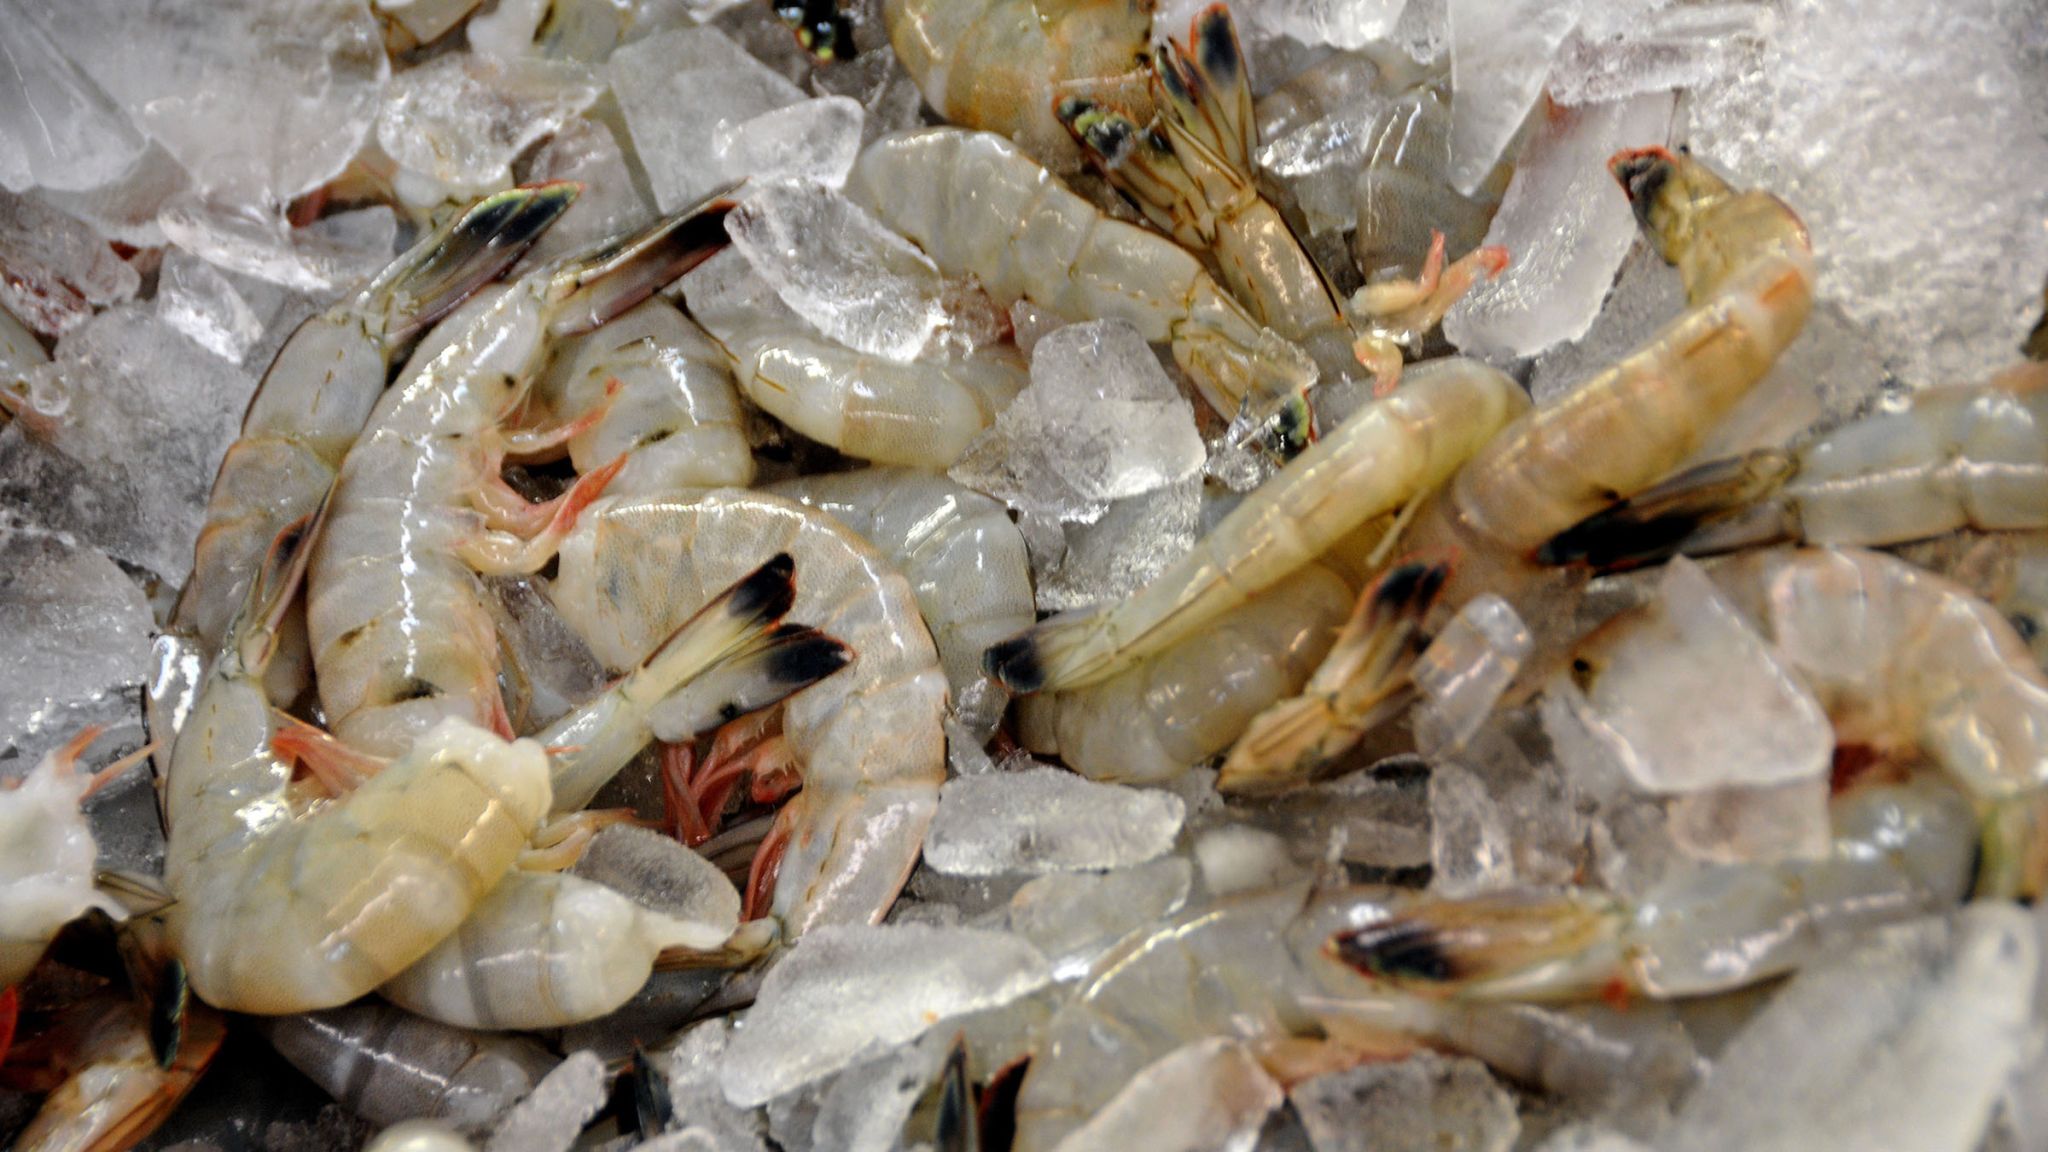 Raw shrimp on ice